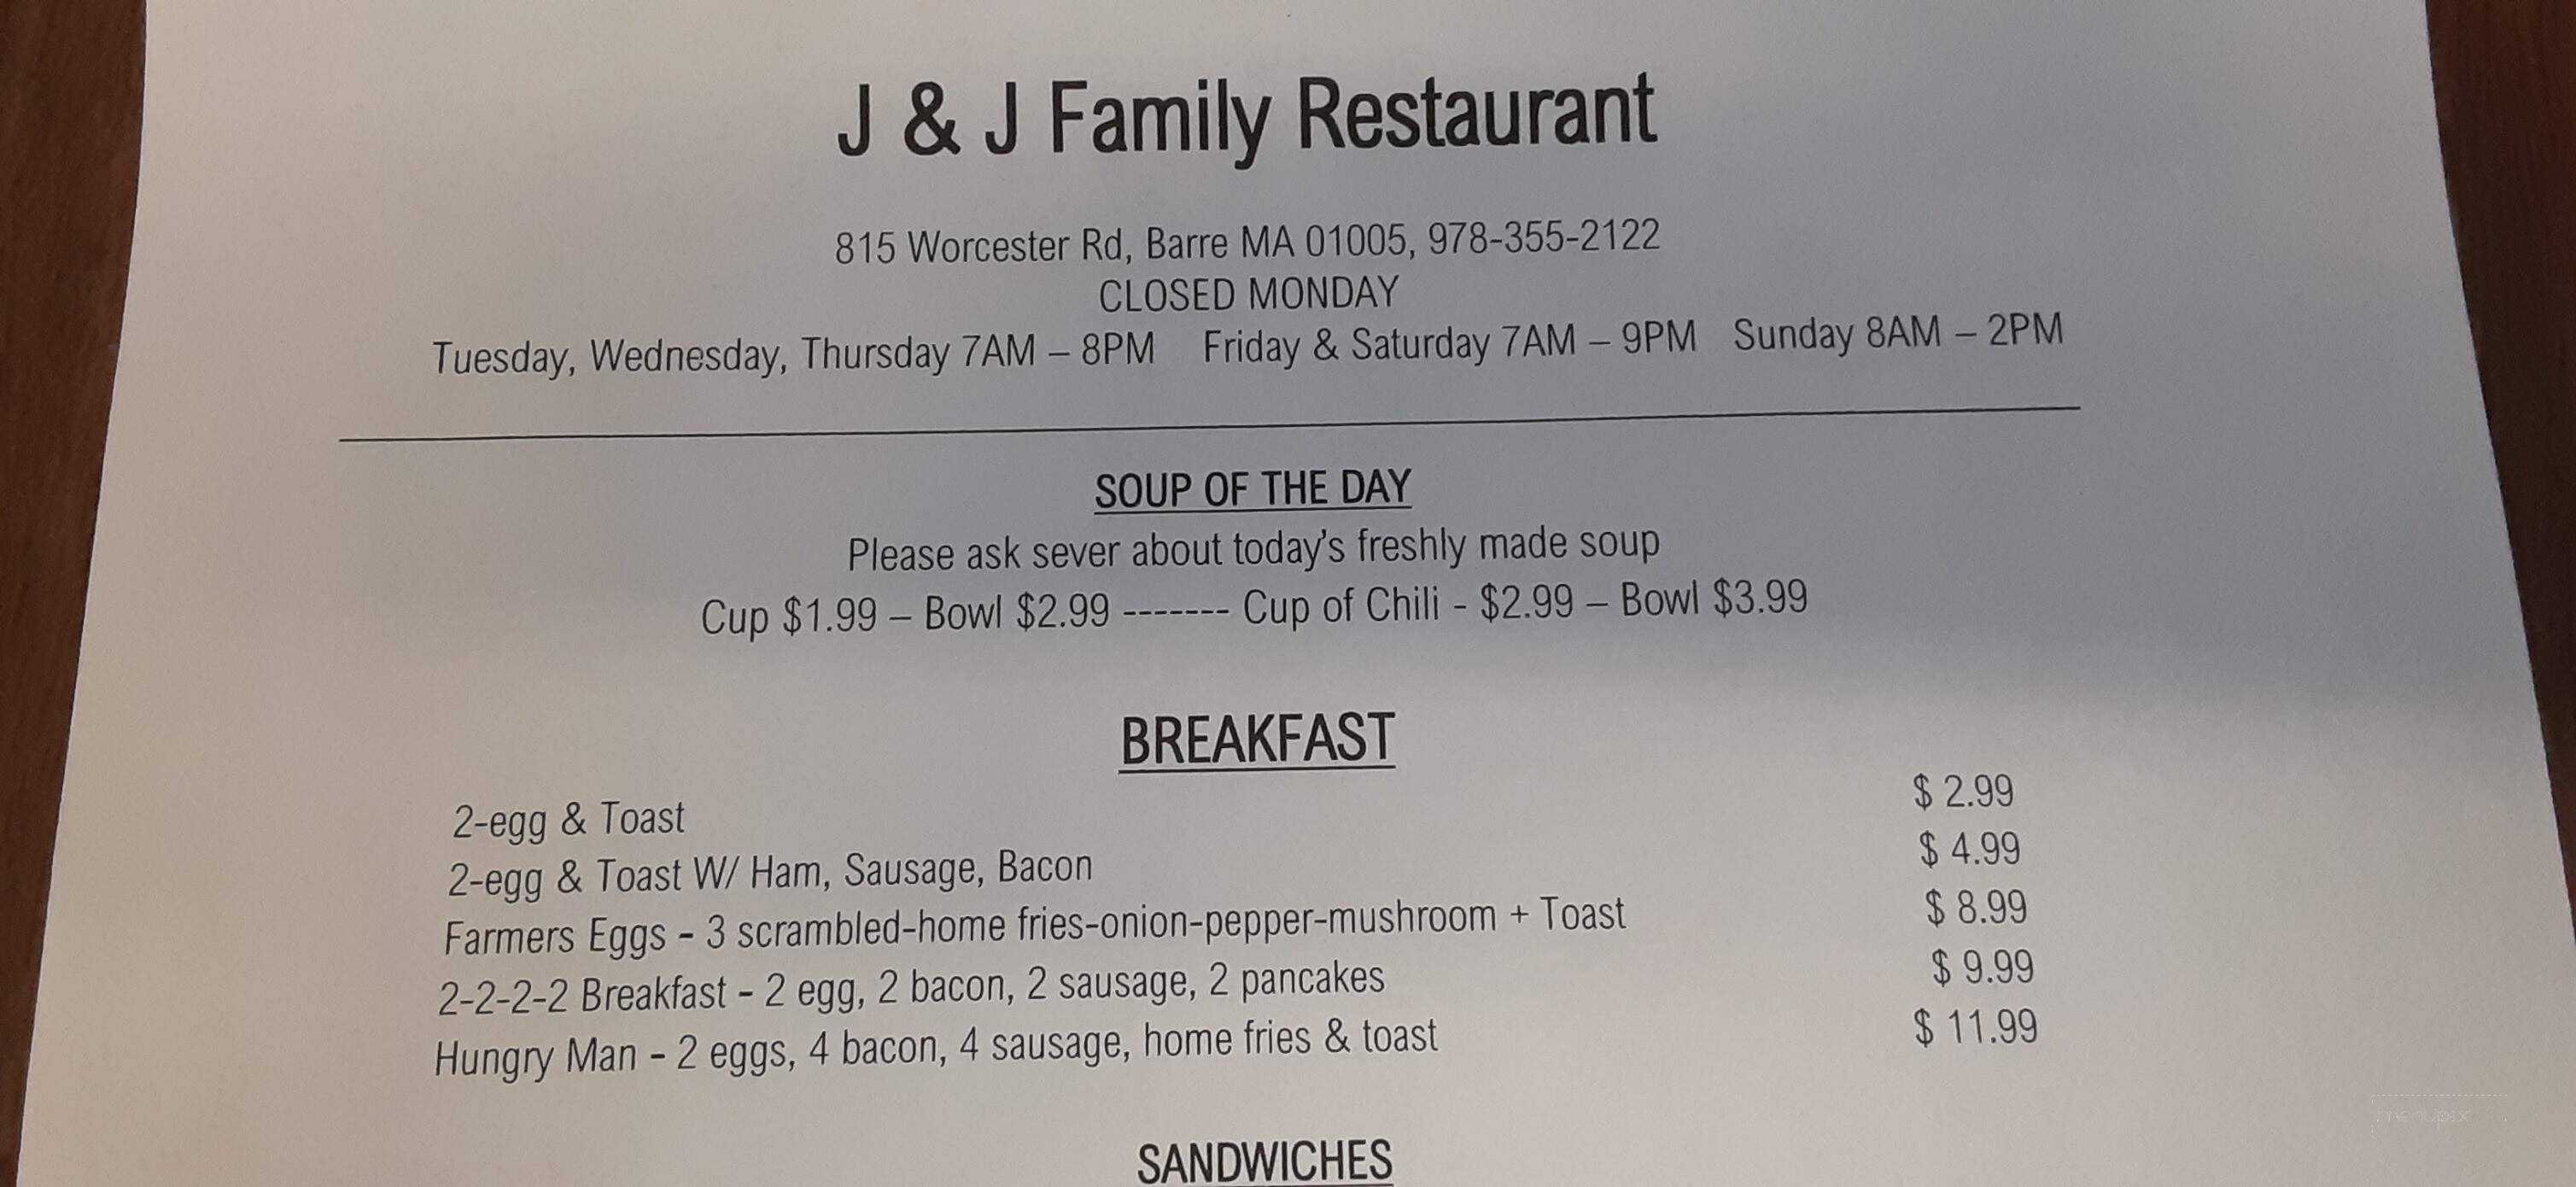 J & J Family Restaurant - Barre, MA